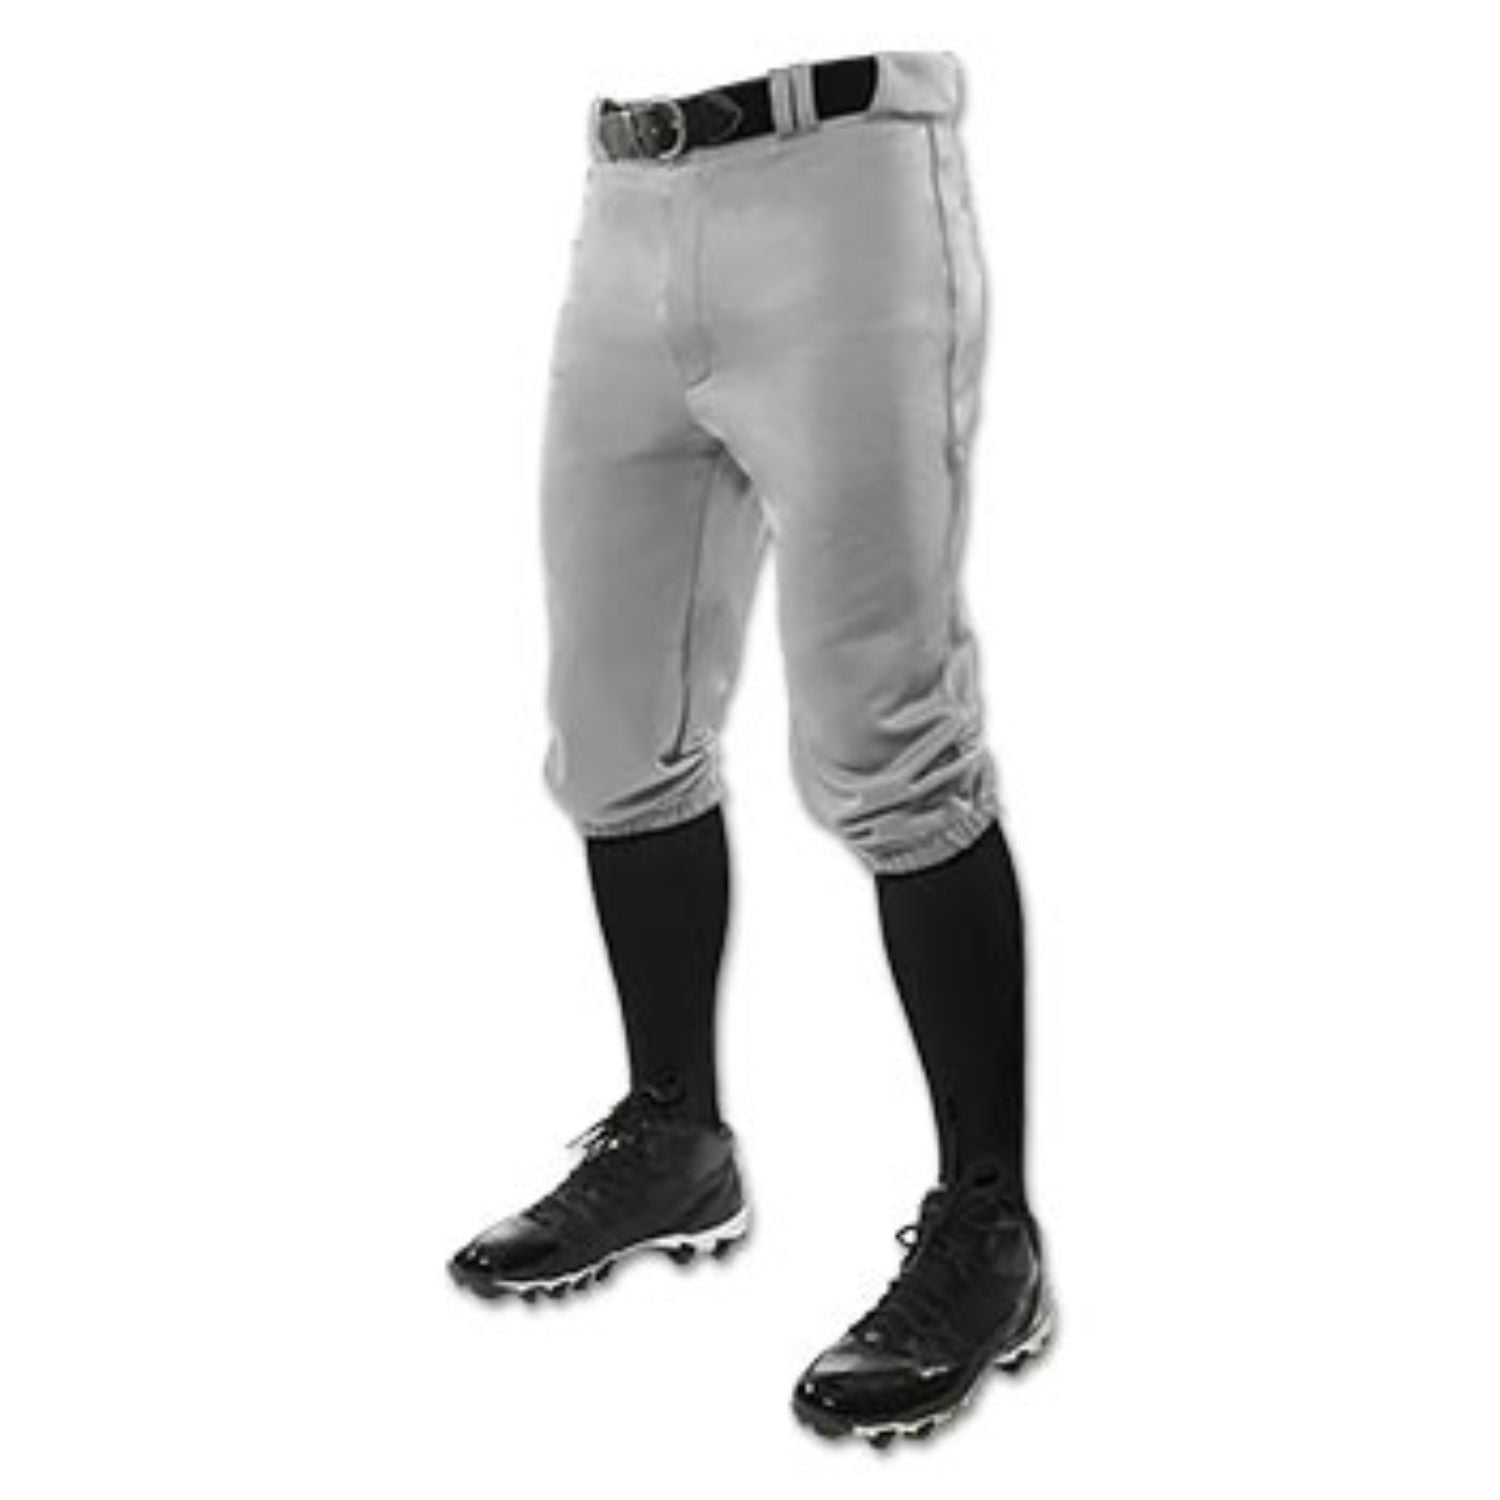 Baseball Youth Knicker Knee High Length Pants Alleson Various colors 605PKNY 